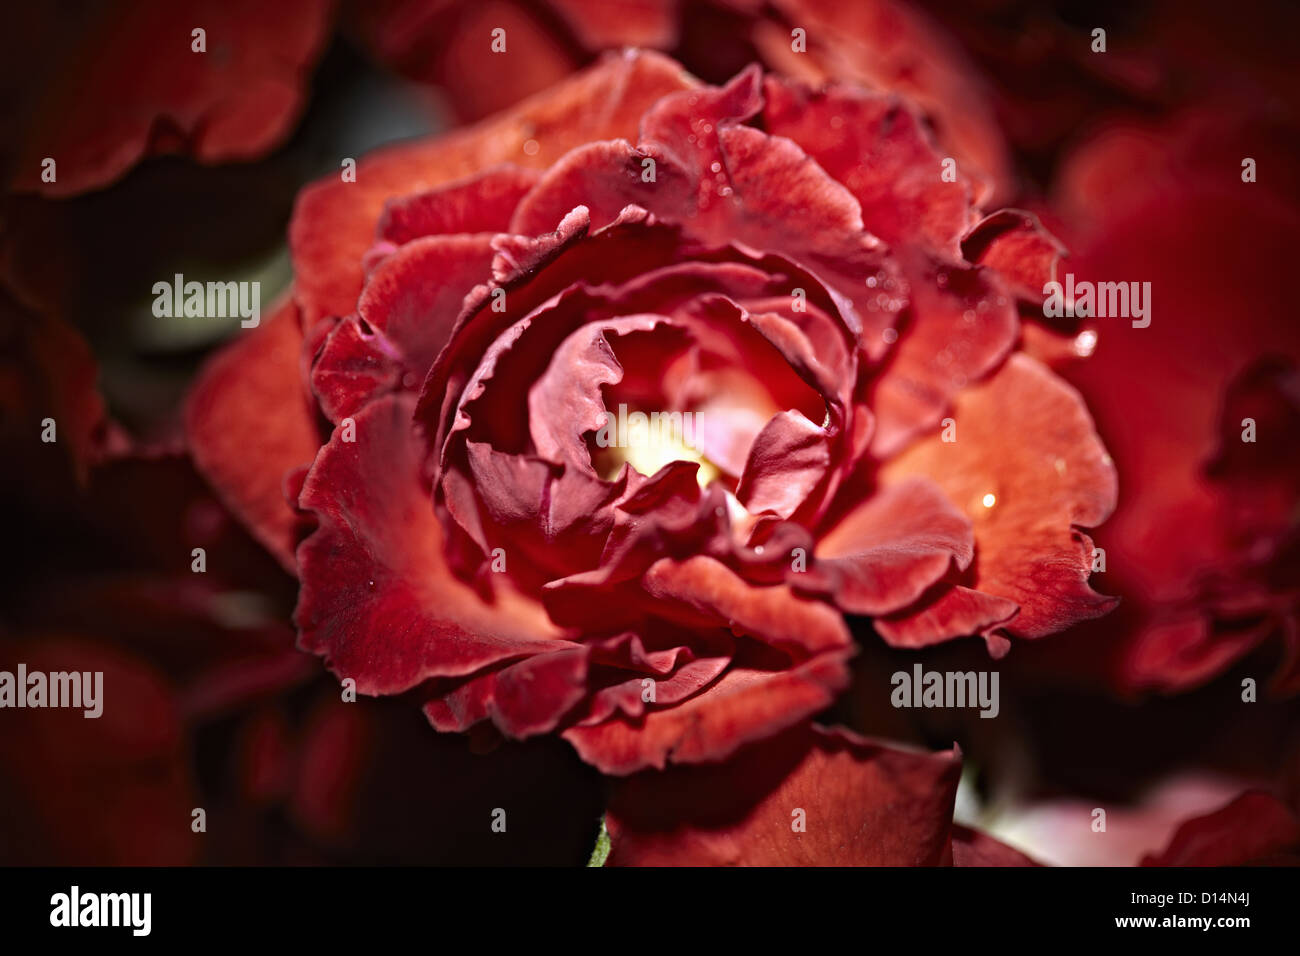 Close up of red rose for sale at market Banque D'Images